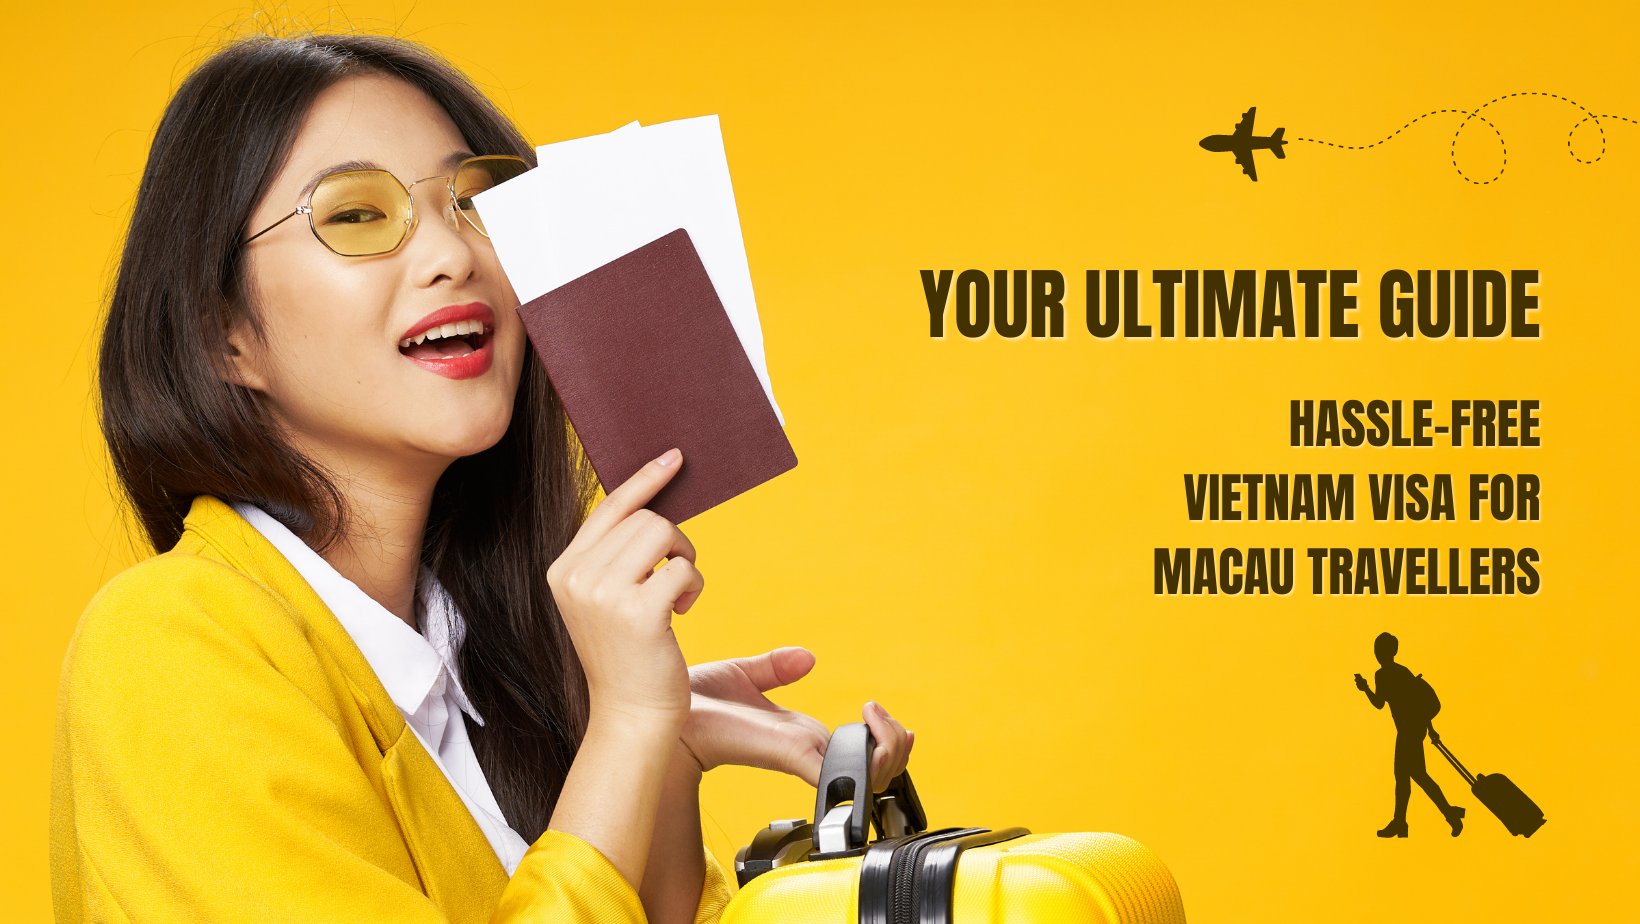 Hassle-free Vietnam Visa for Macau Travellers: Your Ultimate Guide